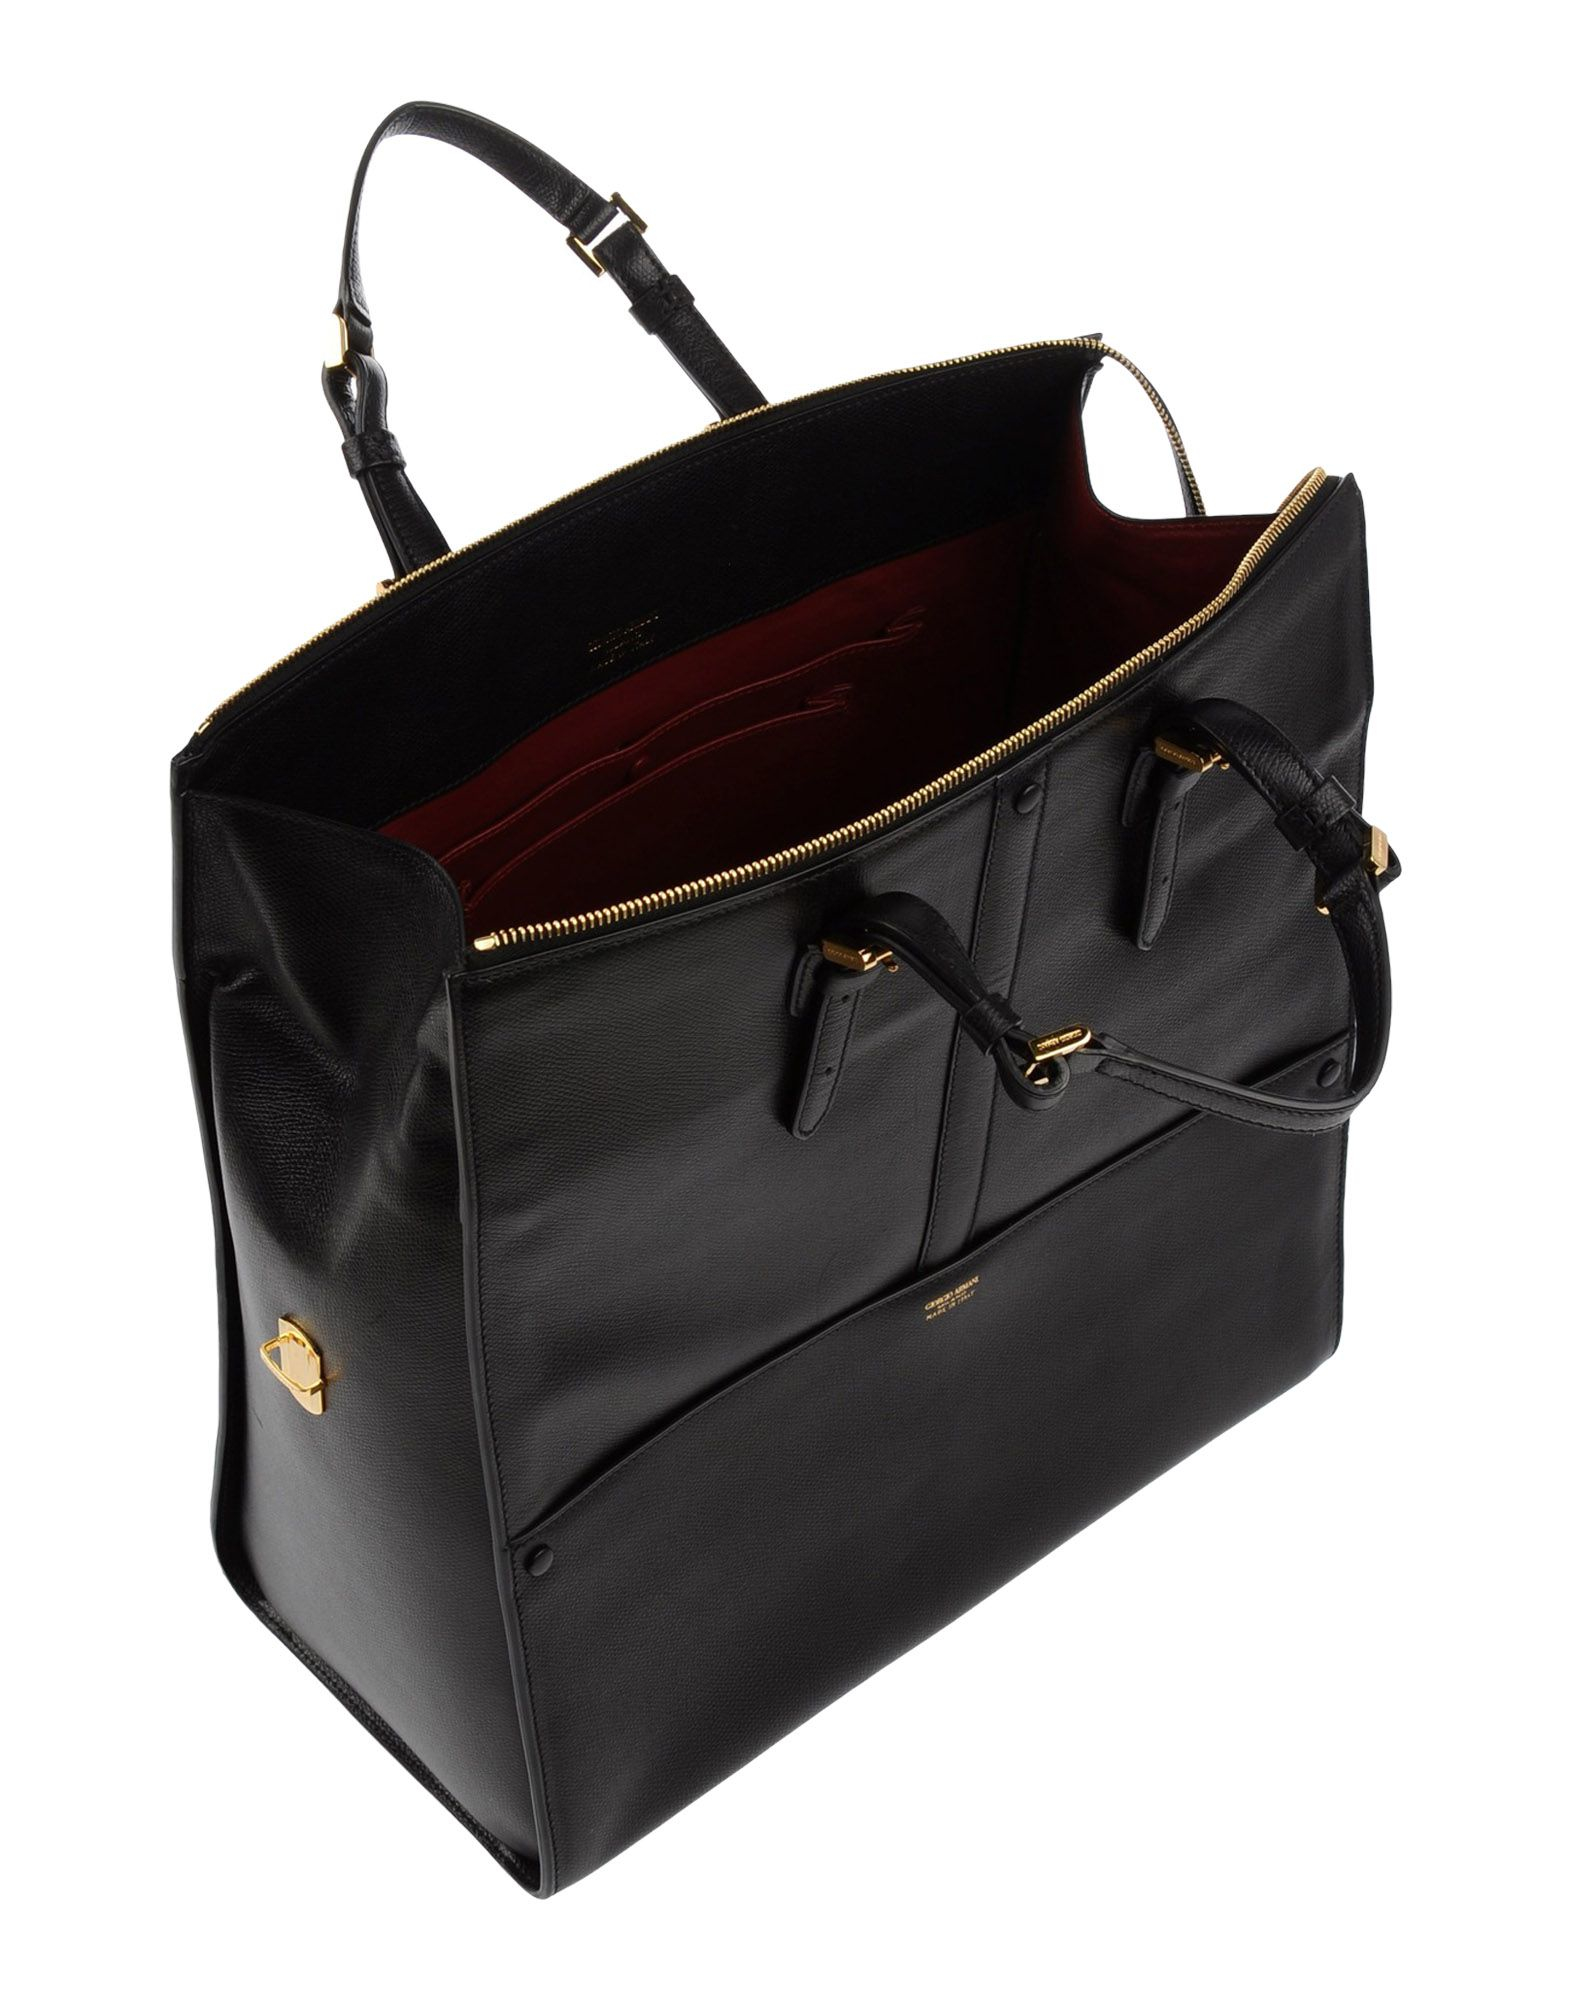 Lyst - Giorgio Armani Handbag in Black